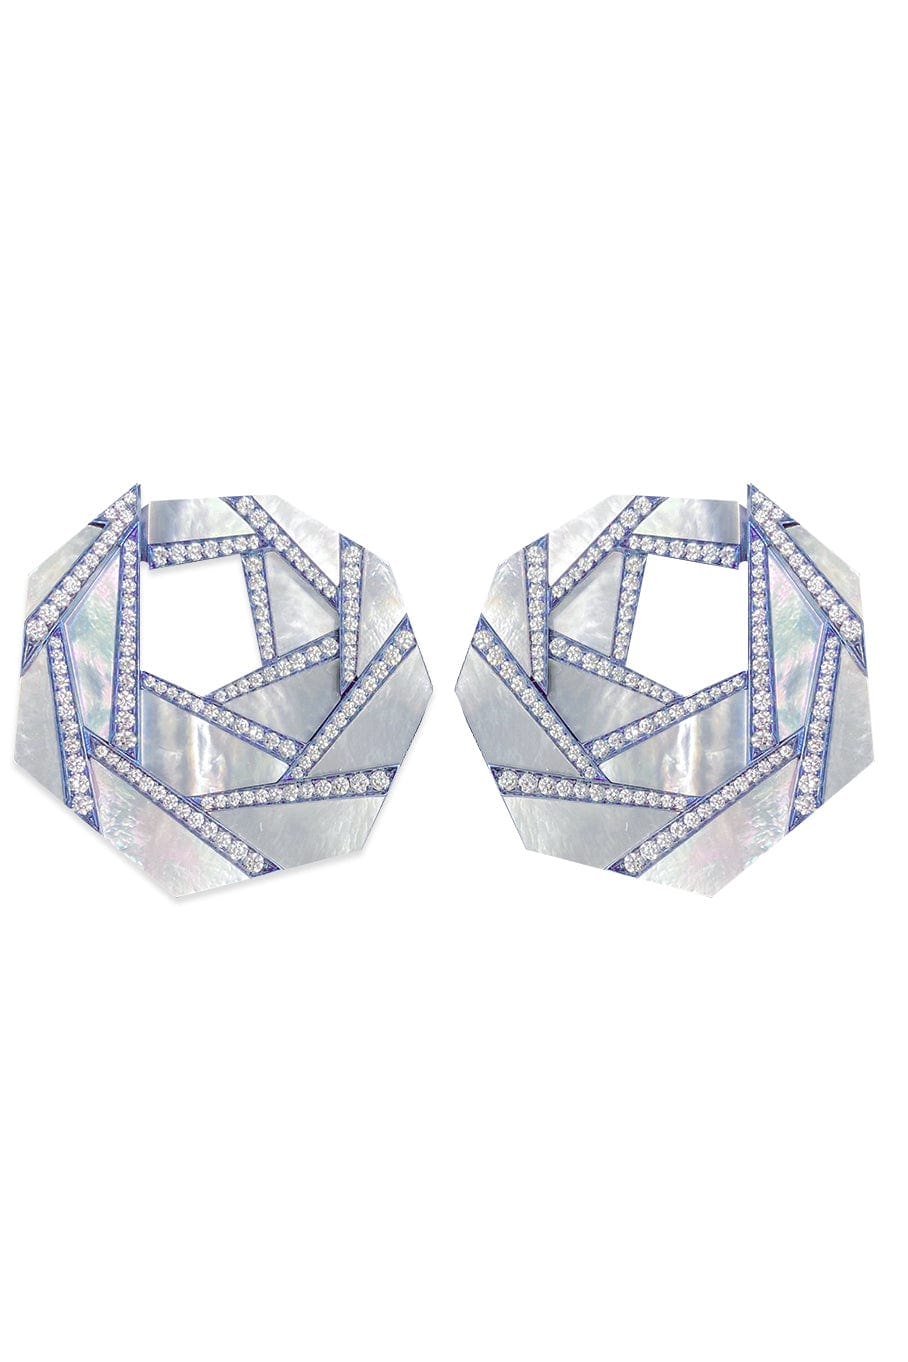 ARUNASHI-Large Origami Mother of Pearl and Diamond Earrings-TITANIUM